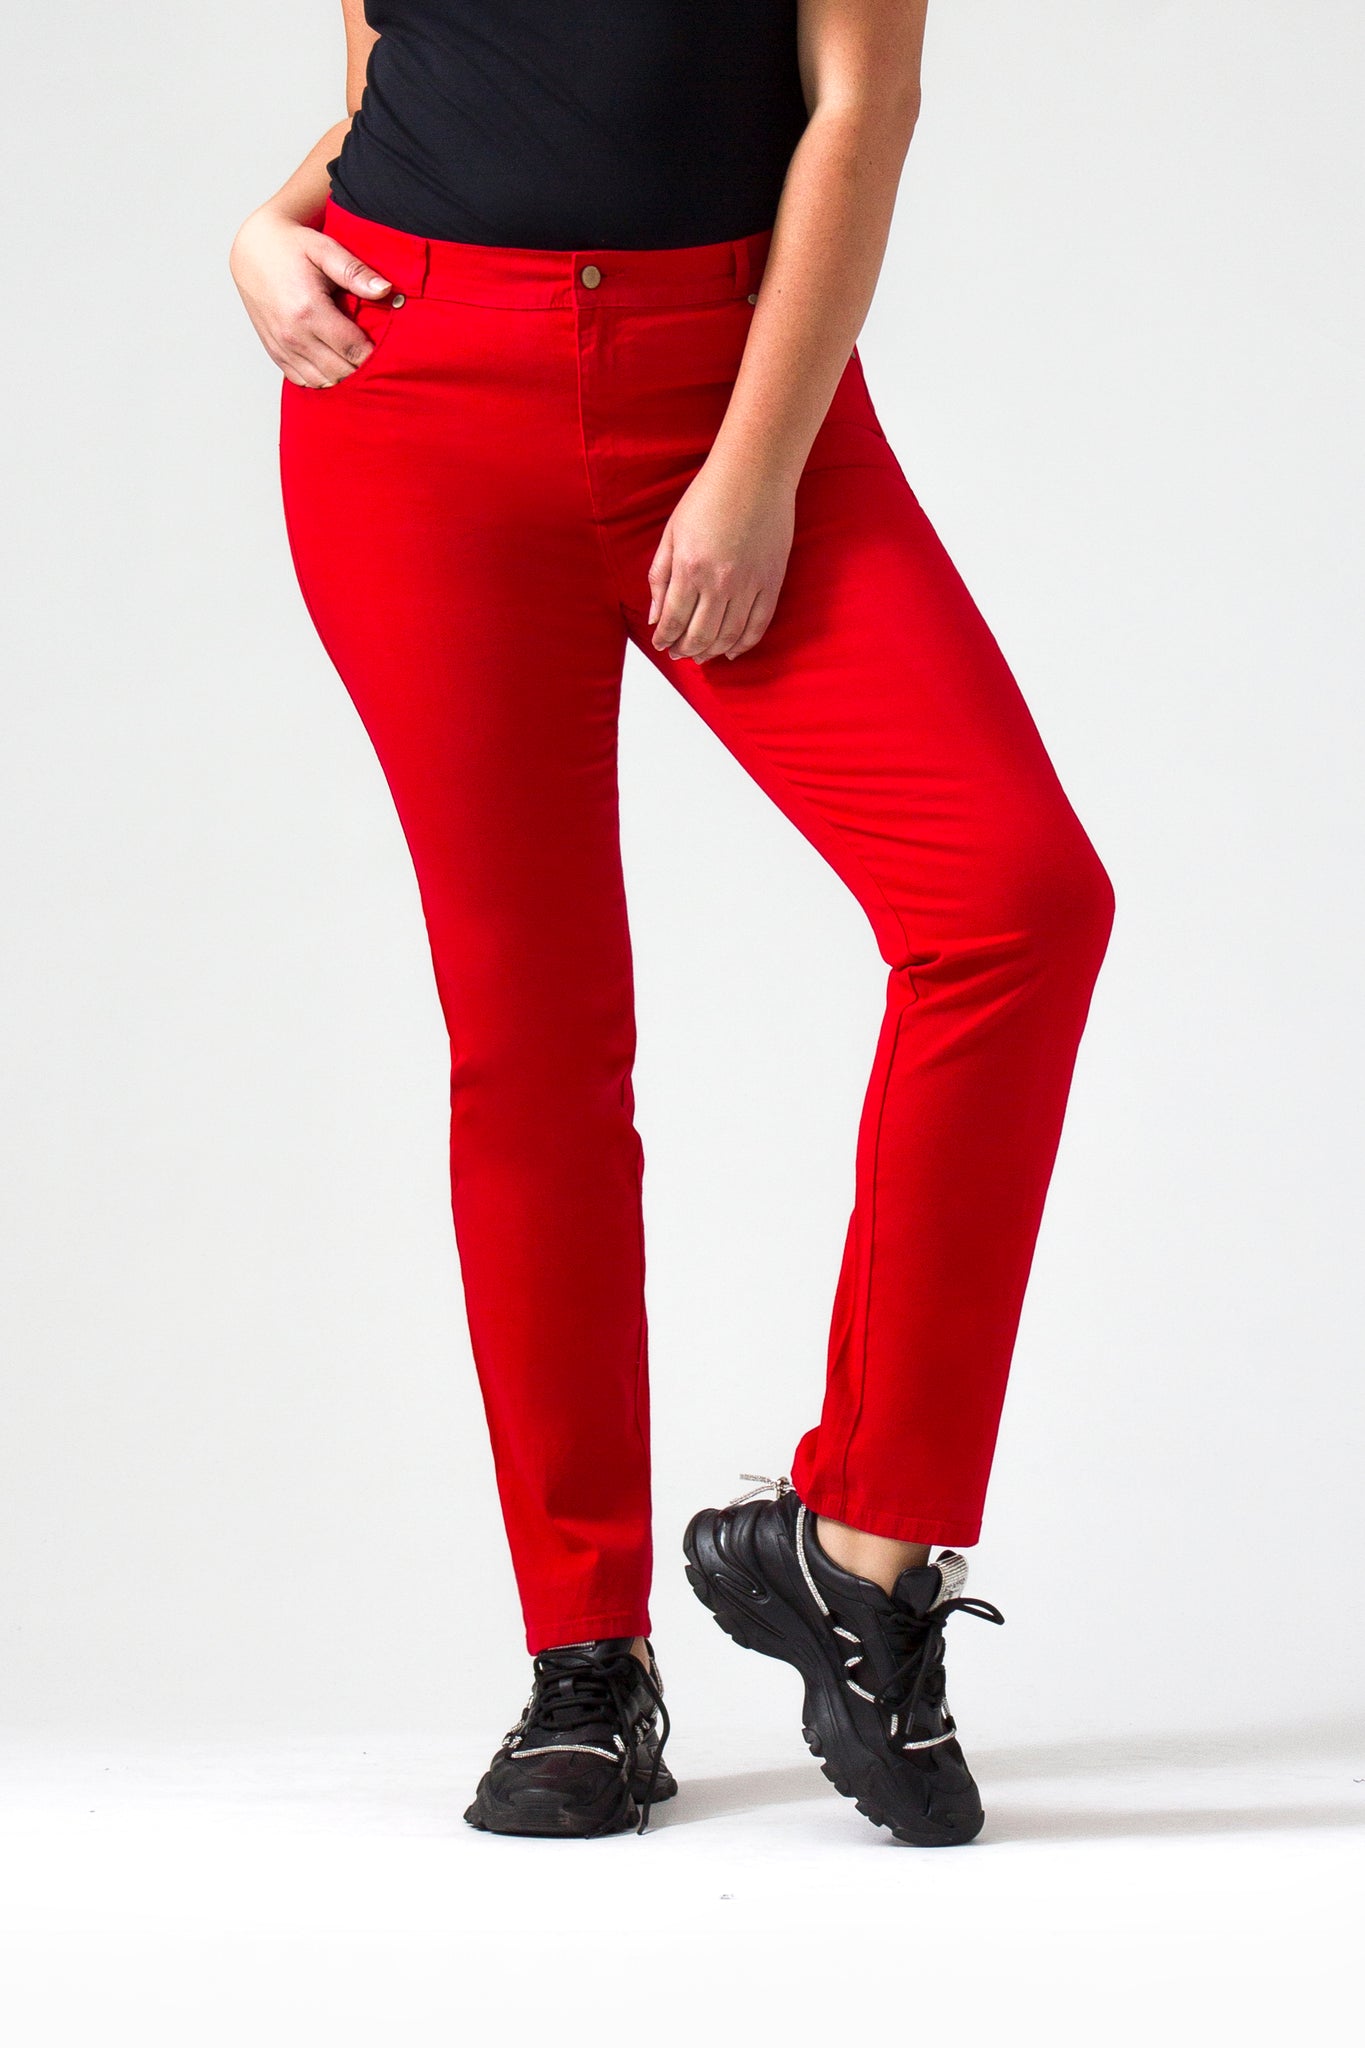 OHPOMP!® Curvy Cintura Alta Tubo Rojo T027